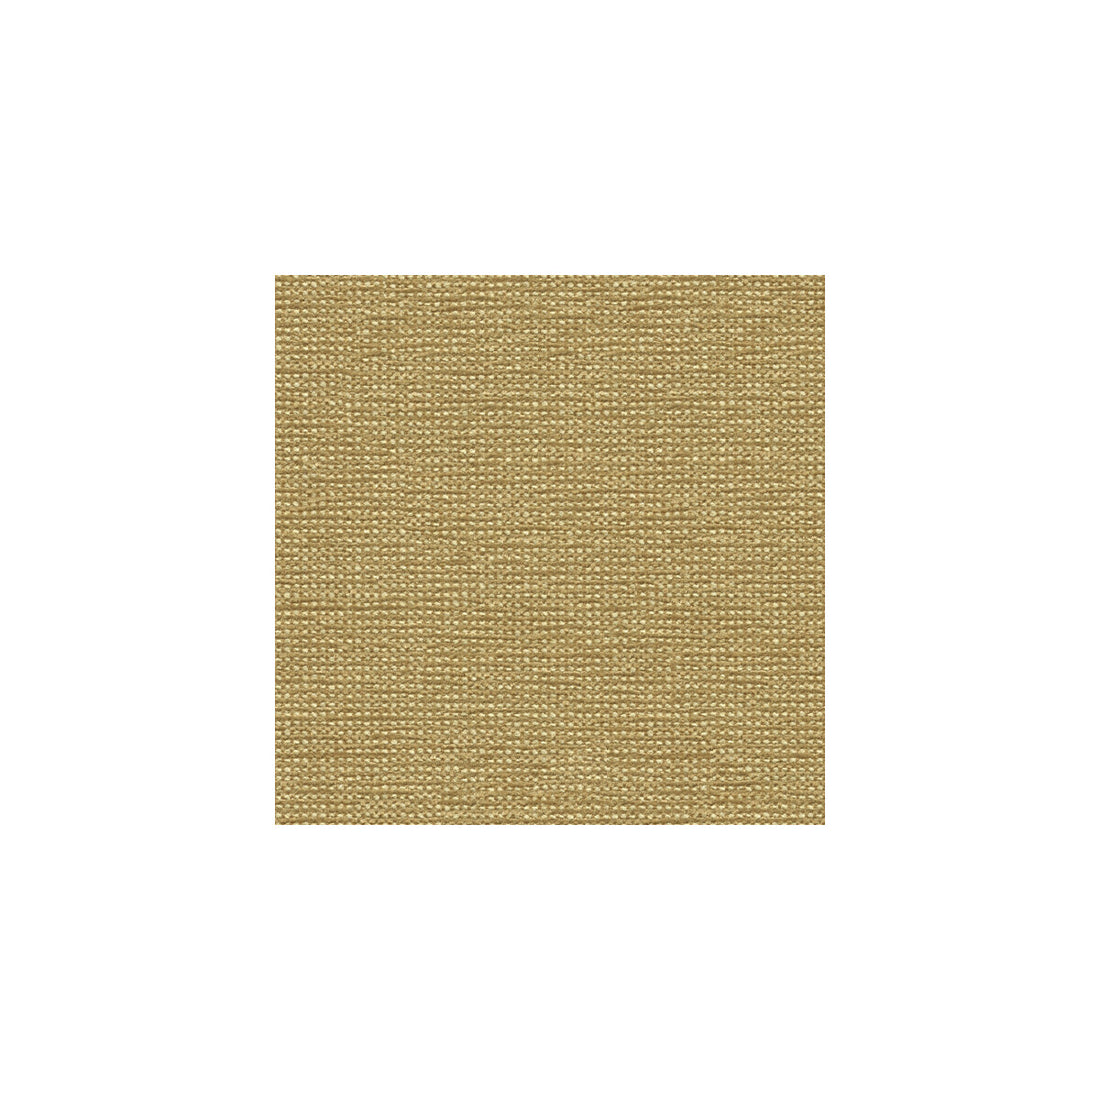 Kravet Smart fabric in 32980-16 color - pattern 32980.16.0 - by Kravet Smart